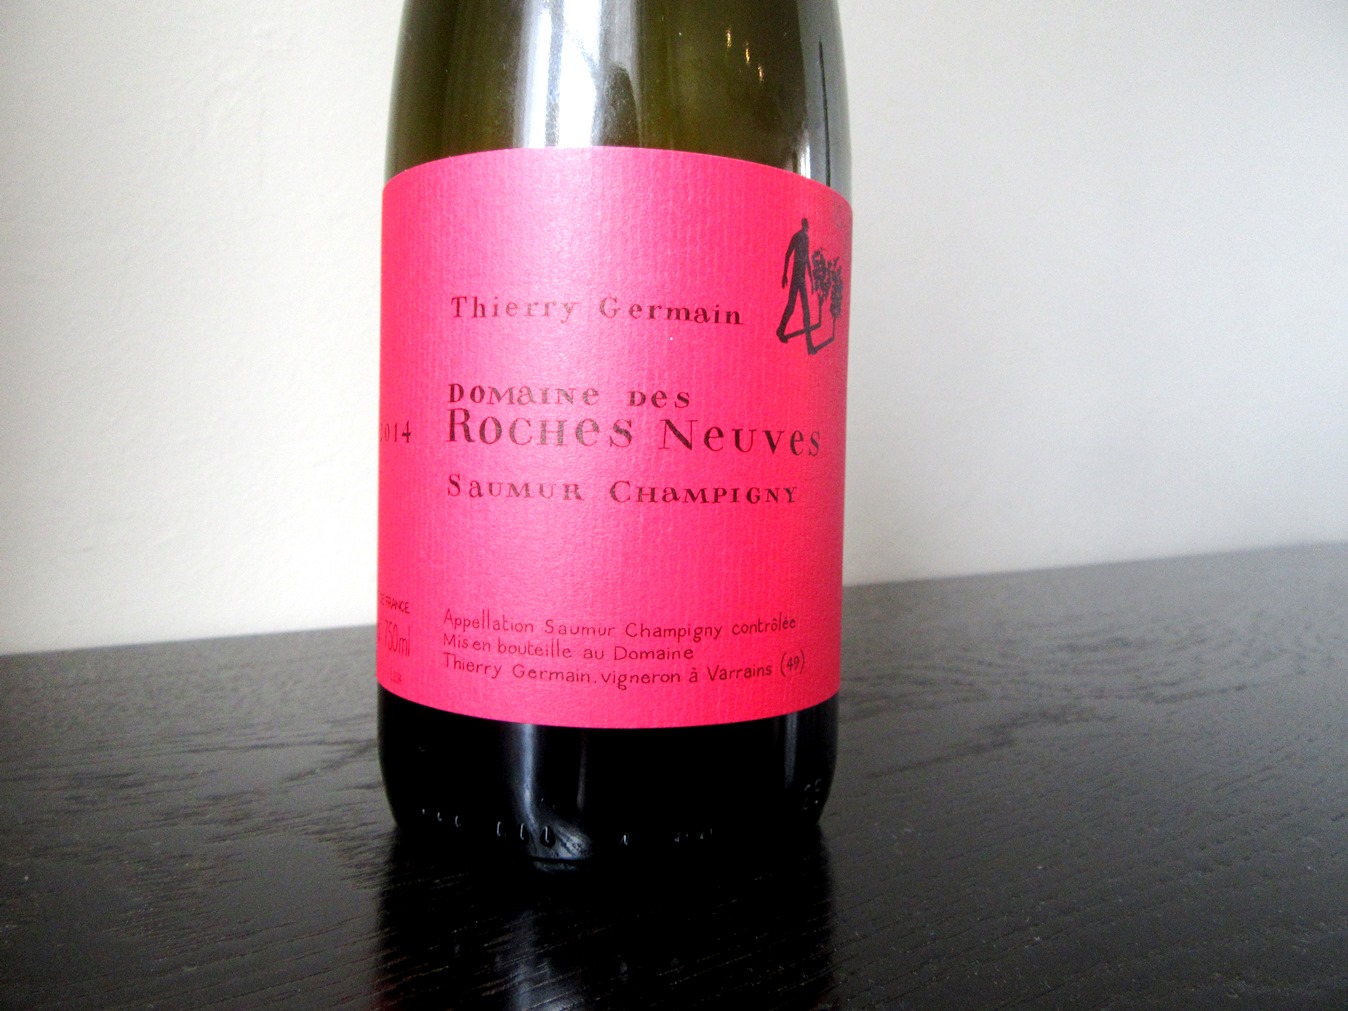 Thierry Germain, Domaine Des Roches Neuves Saumur Champigny 2014, Loire, France, Wine Casual